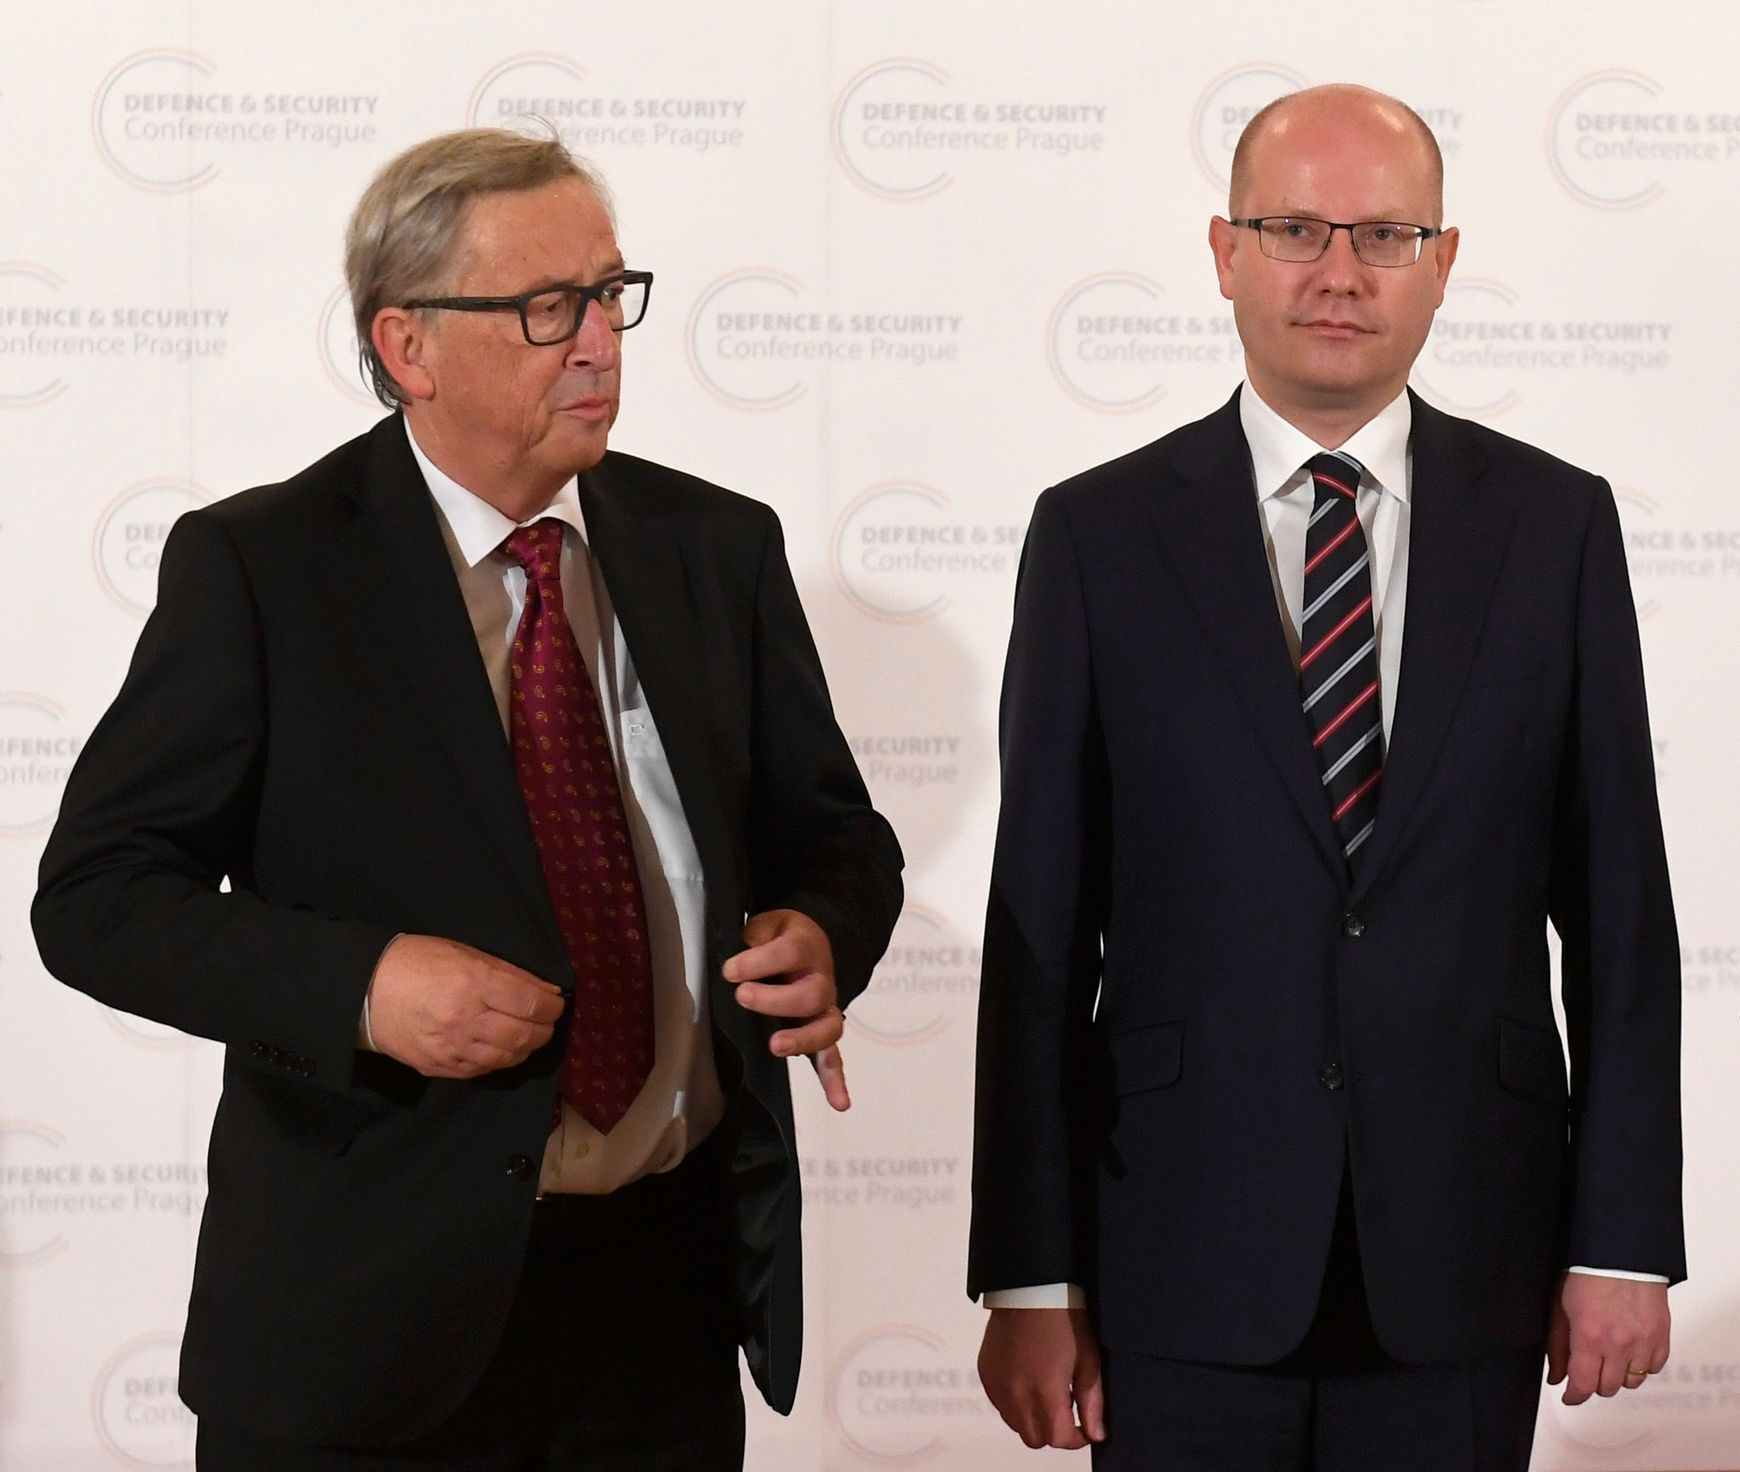 Předseda Evropské komise Jean-Claude Juncker a český premiér Bohuslav Sobotka na konferenci Evropské unie.